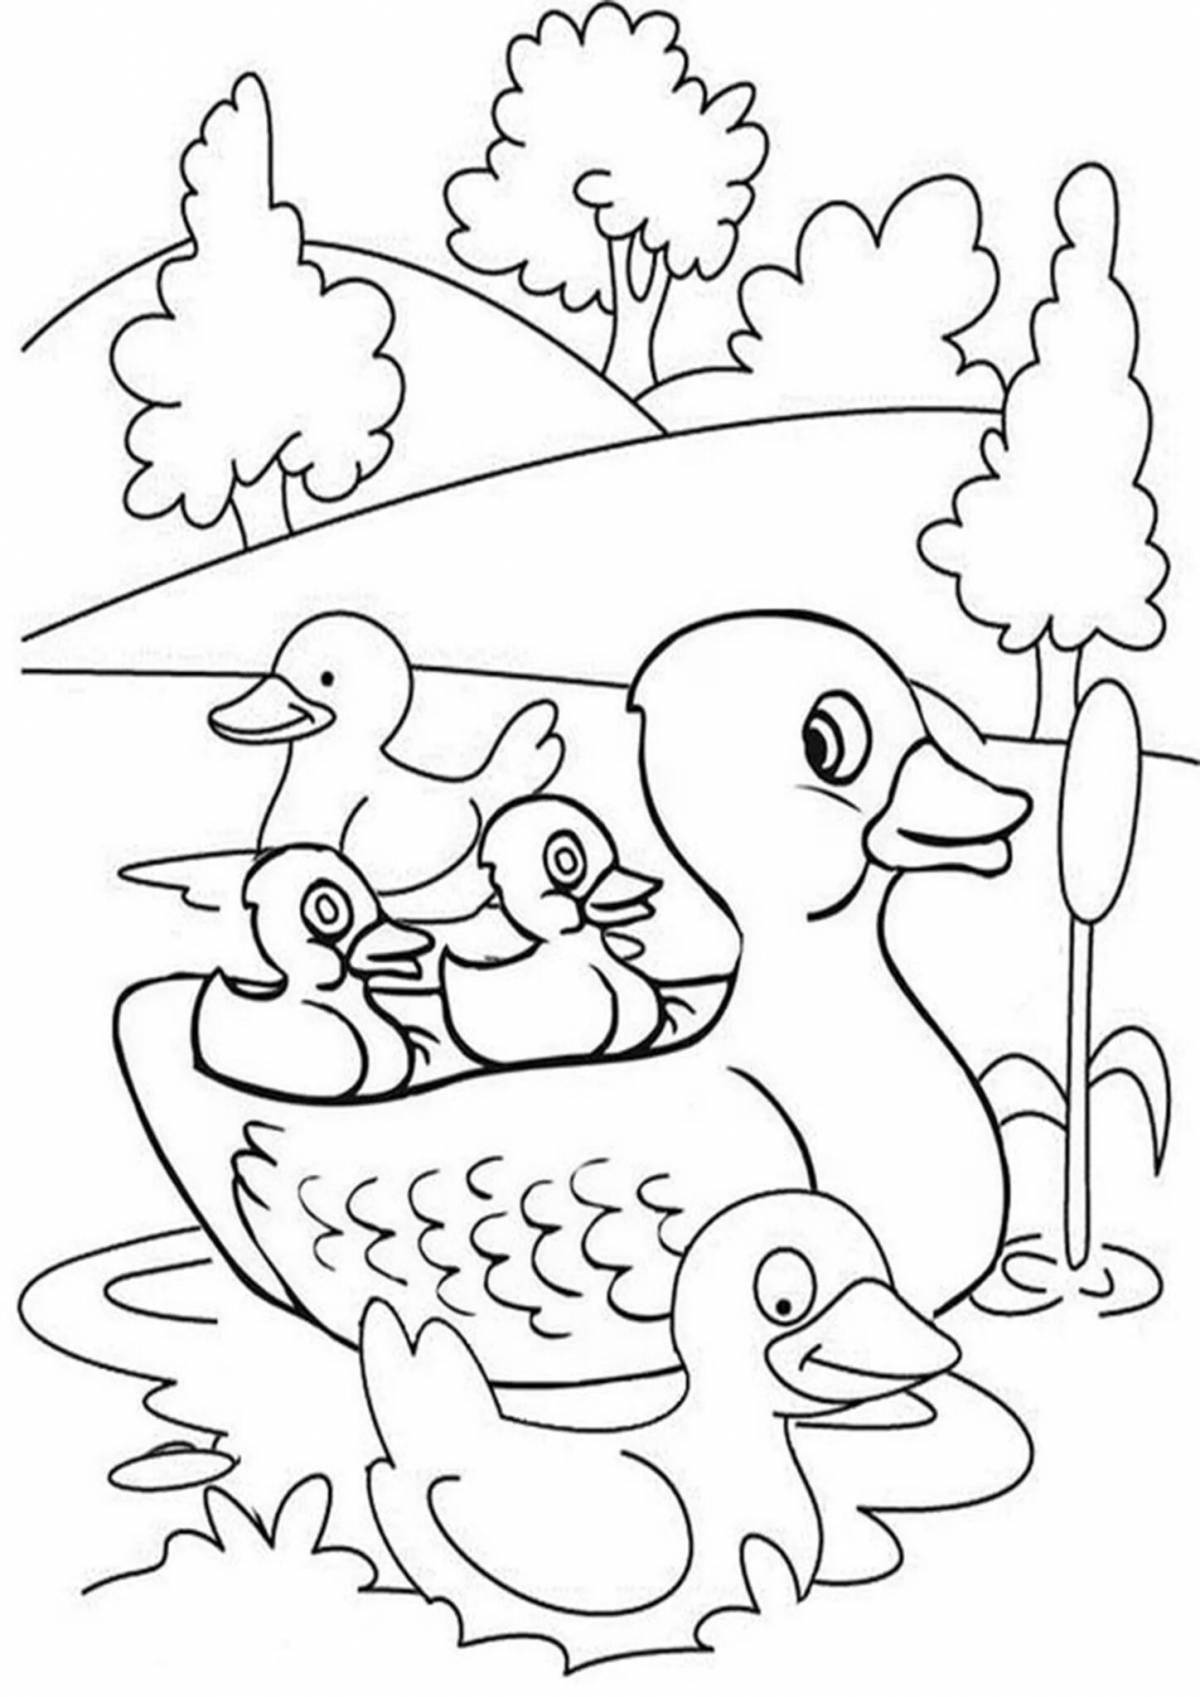 Live lanfan duck coloring book